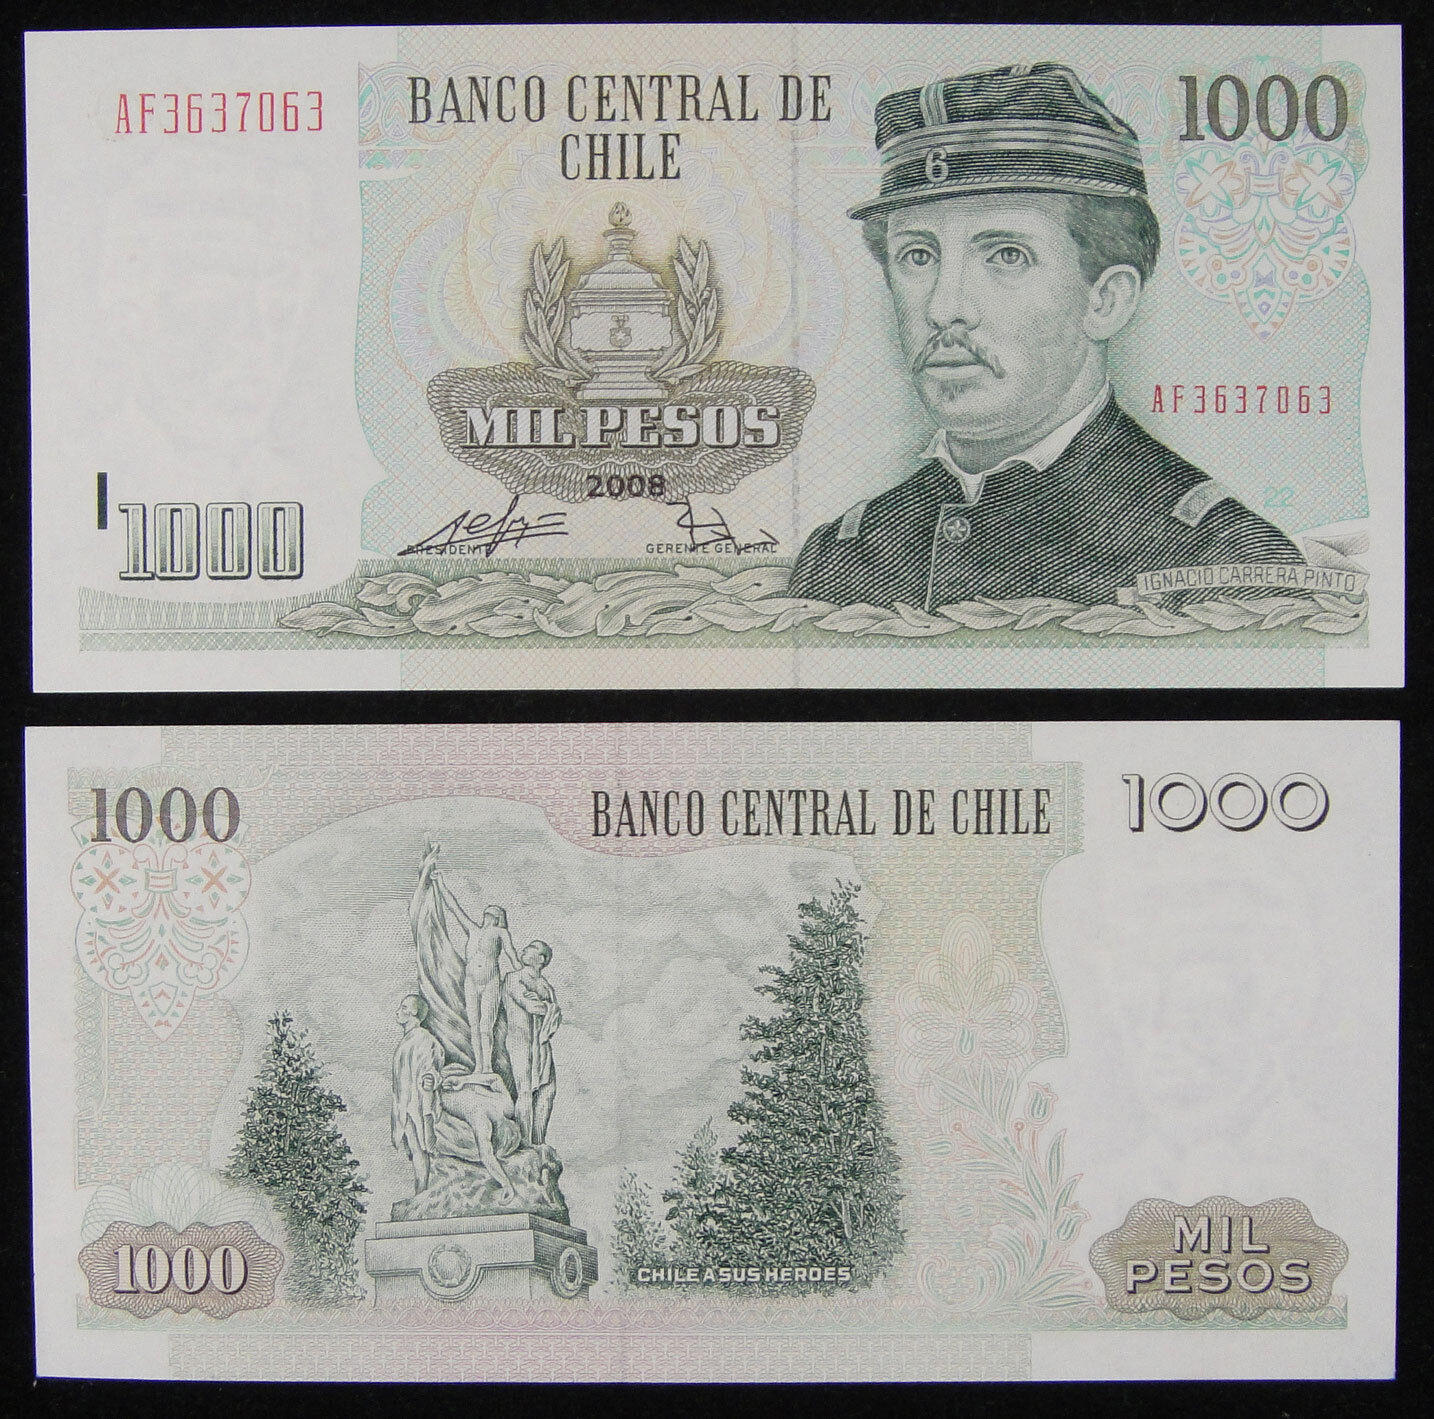 Chile Banknote 1000 Pesos 2008 UNC